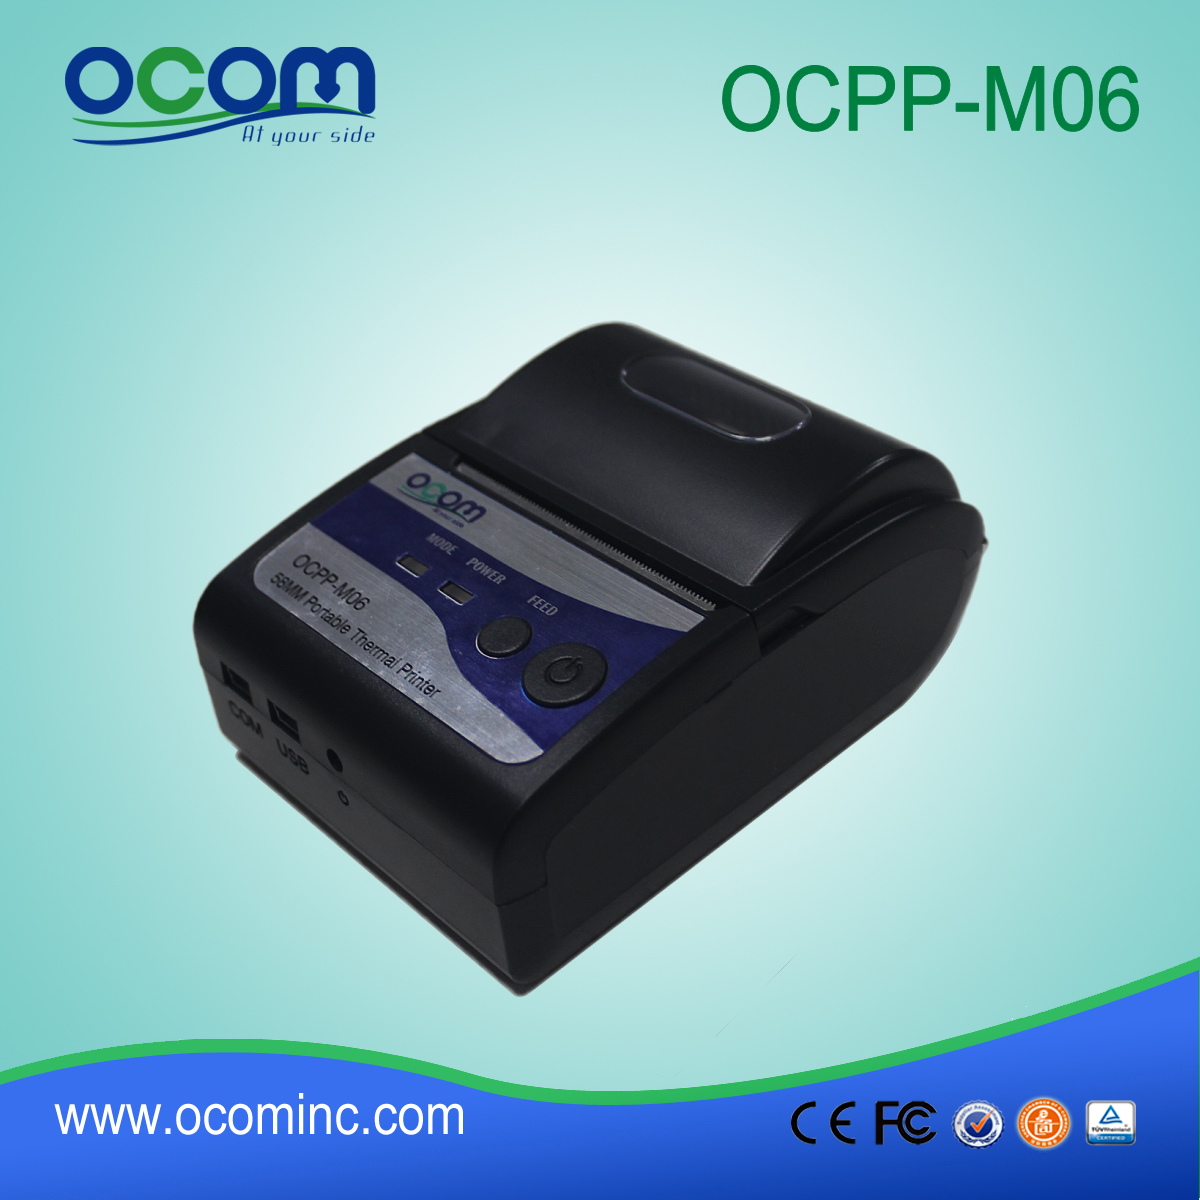 (OCPP-M06) Chine OCOM bonne 58mm de vente portable Bluetooth imprimante thermique portable